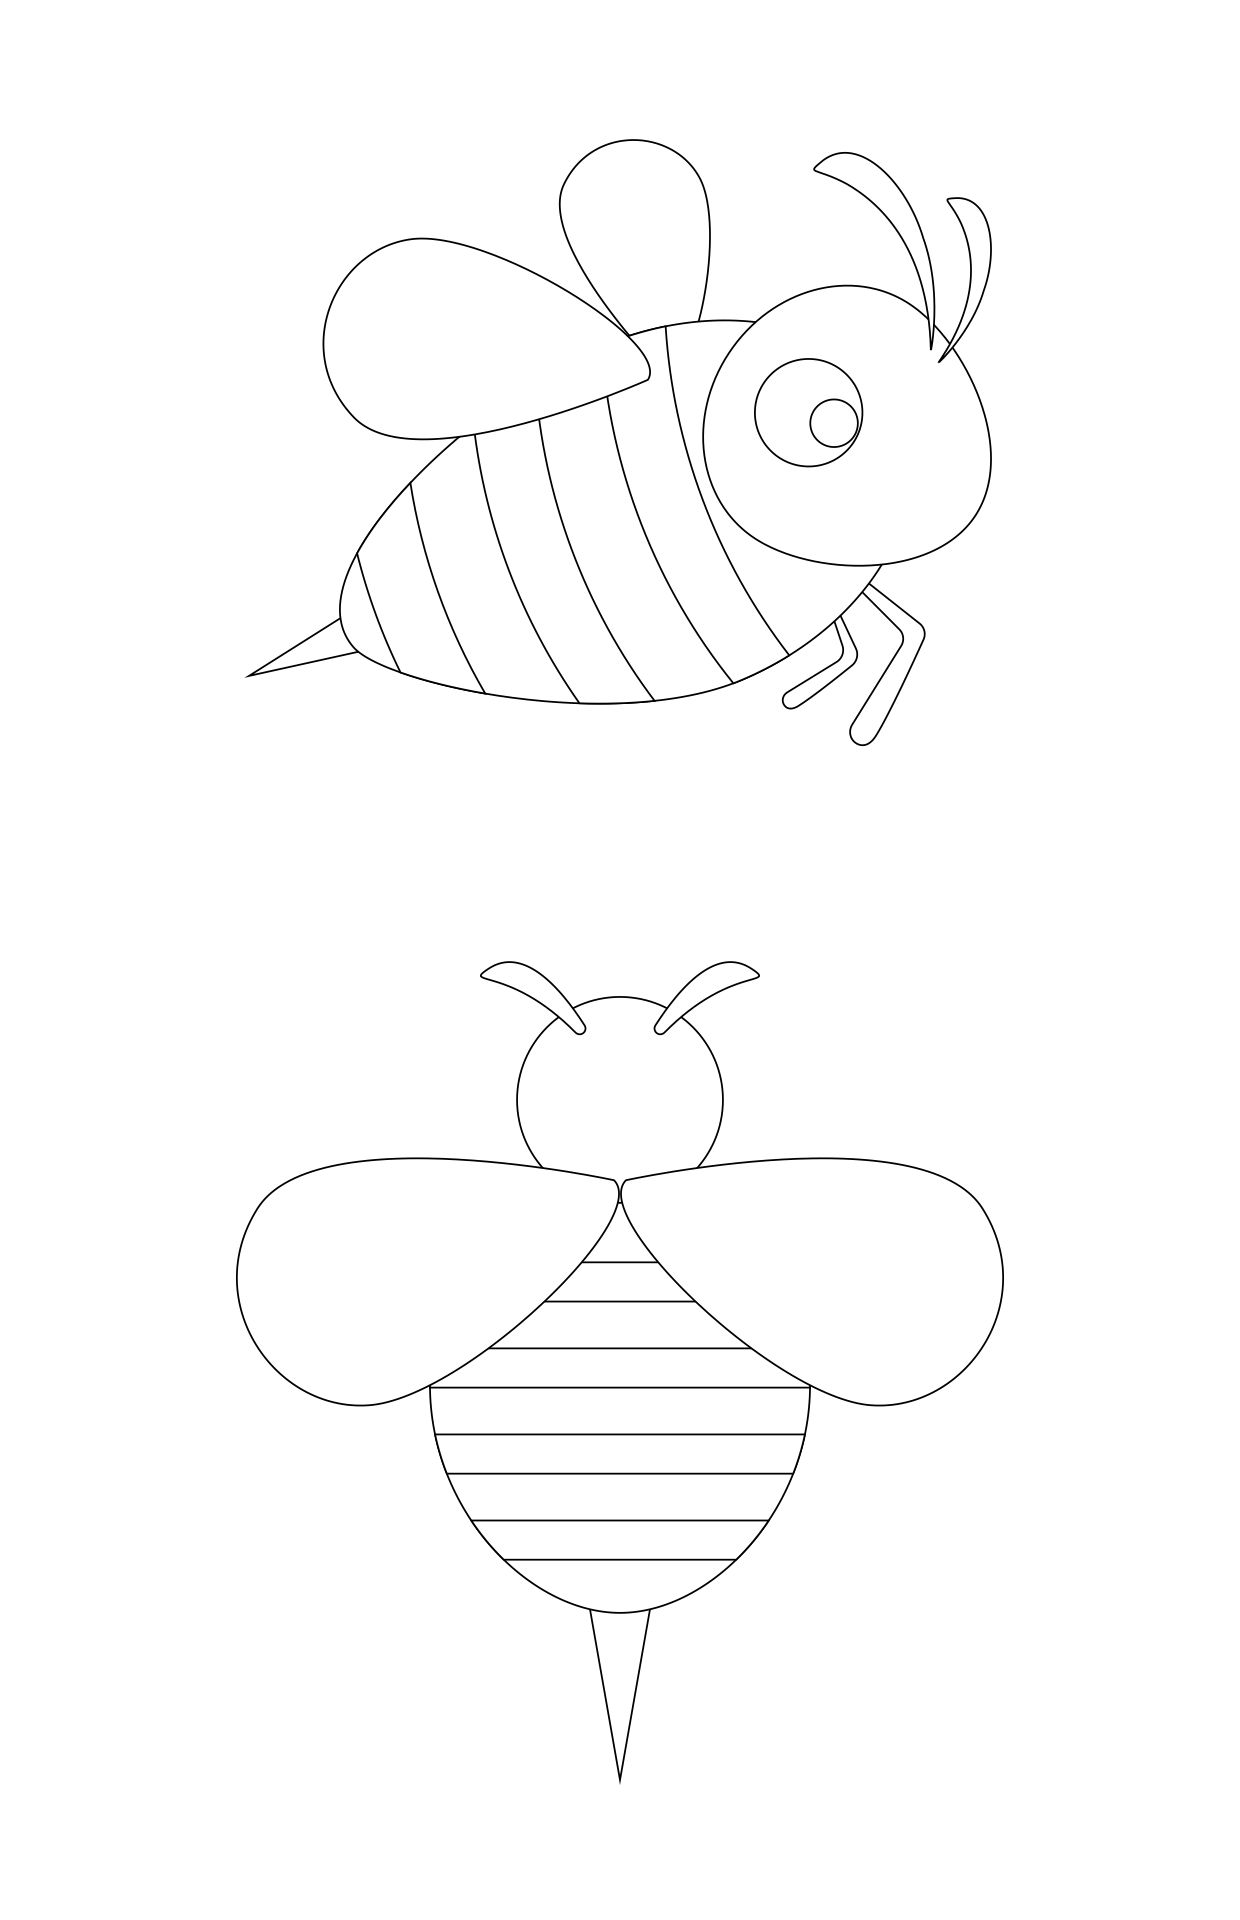 Bee Templates